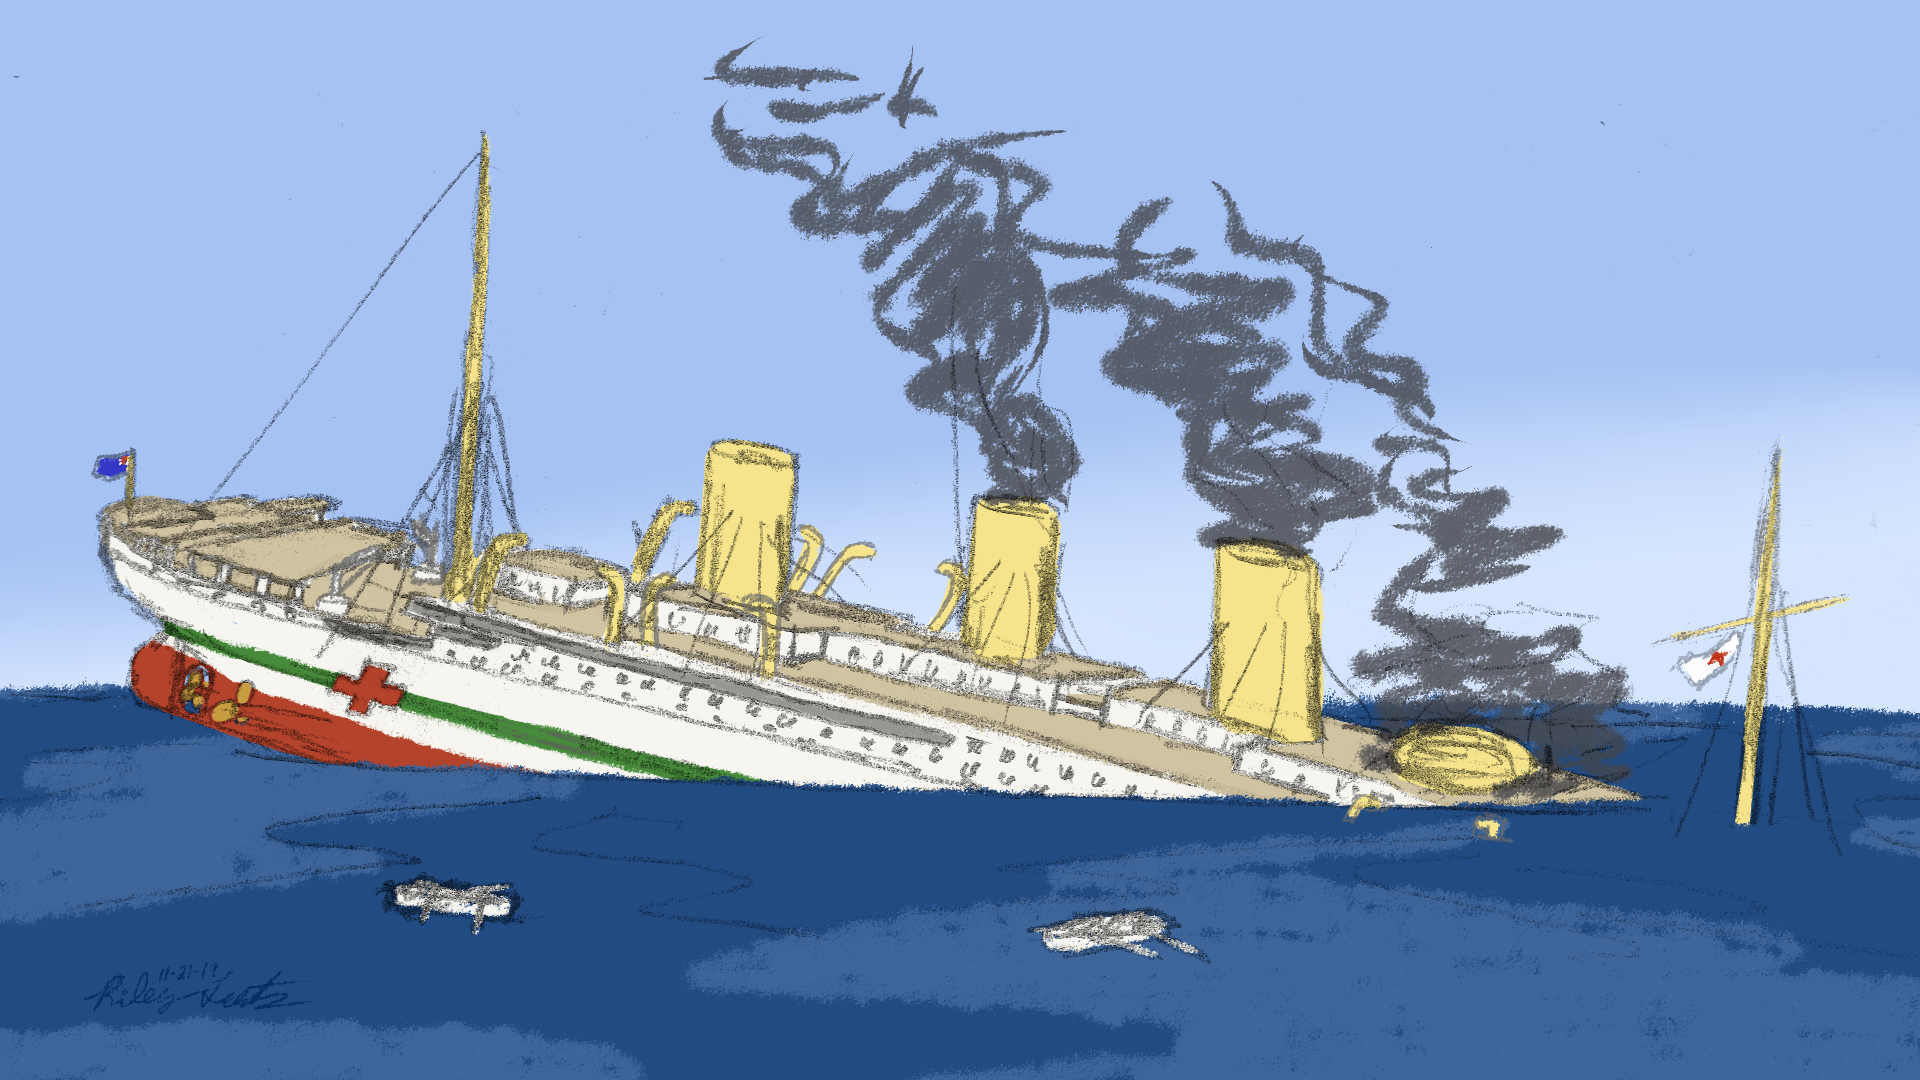 Sinking of HMHS Britannic by RileyTNT on Newgrounds